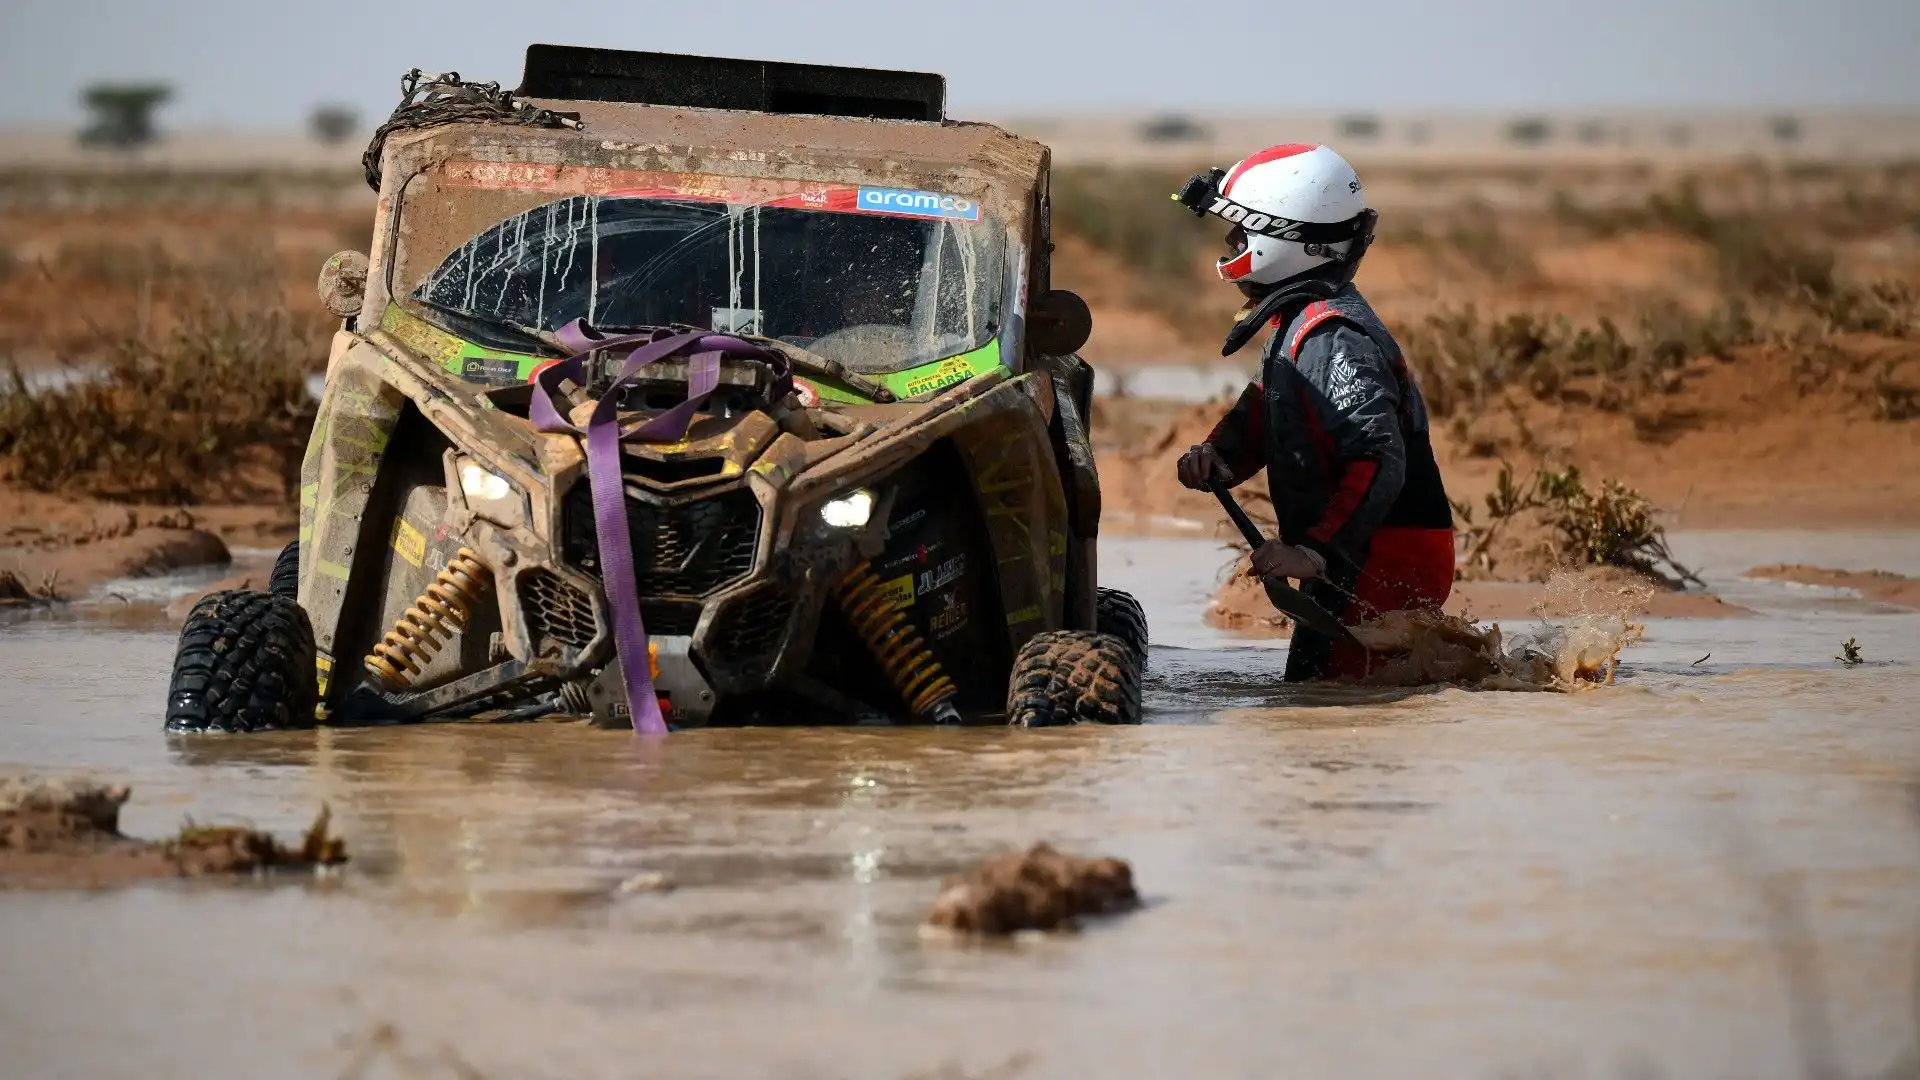 Altra disavventura al Rally di Dakar